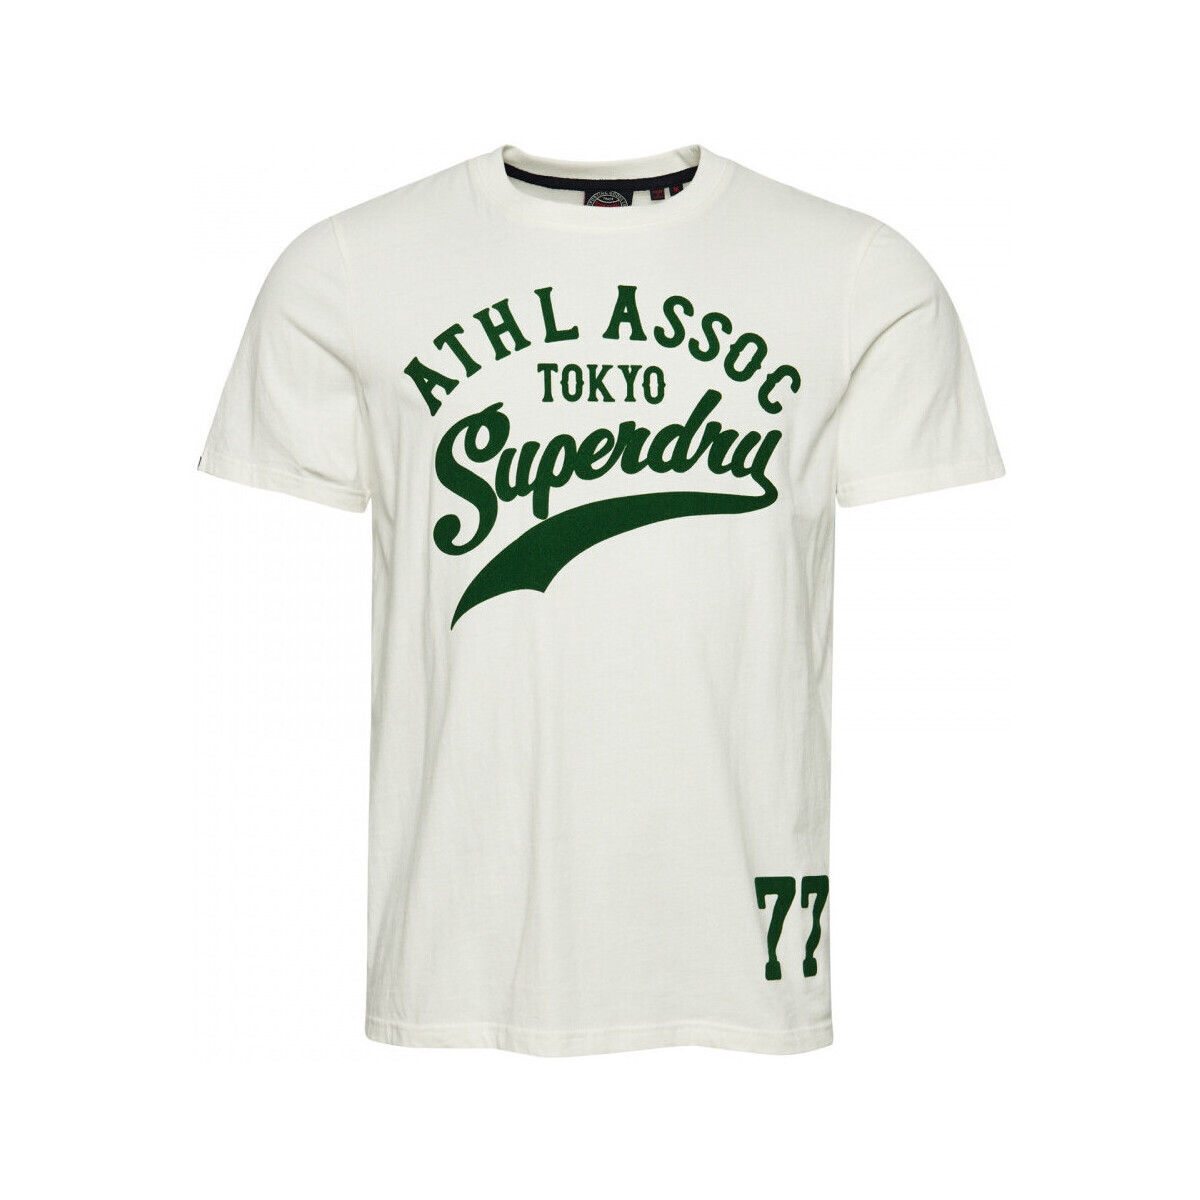 textil Herre T-shirts & poloer Superdry Vintage home run Beige